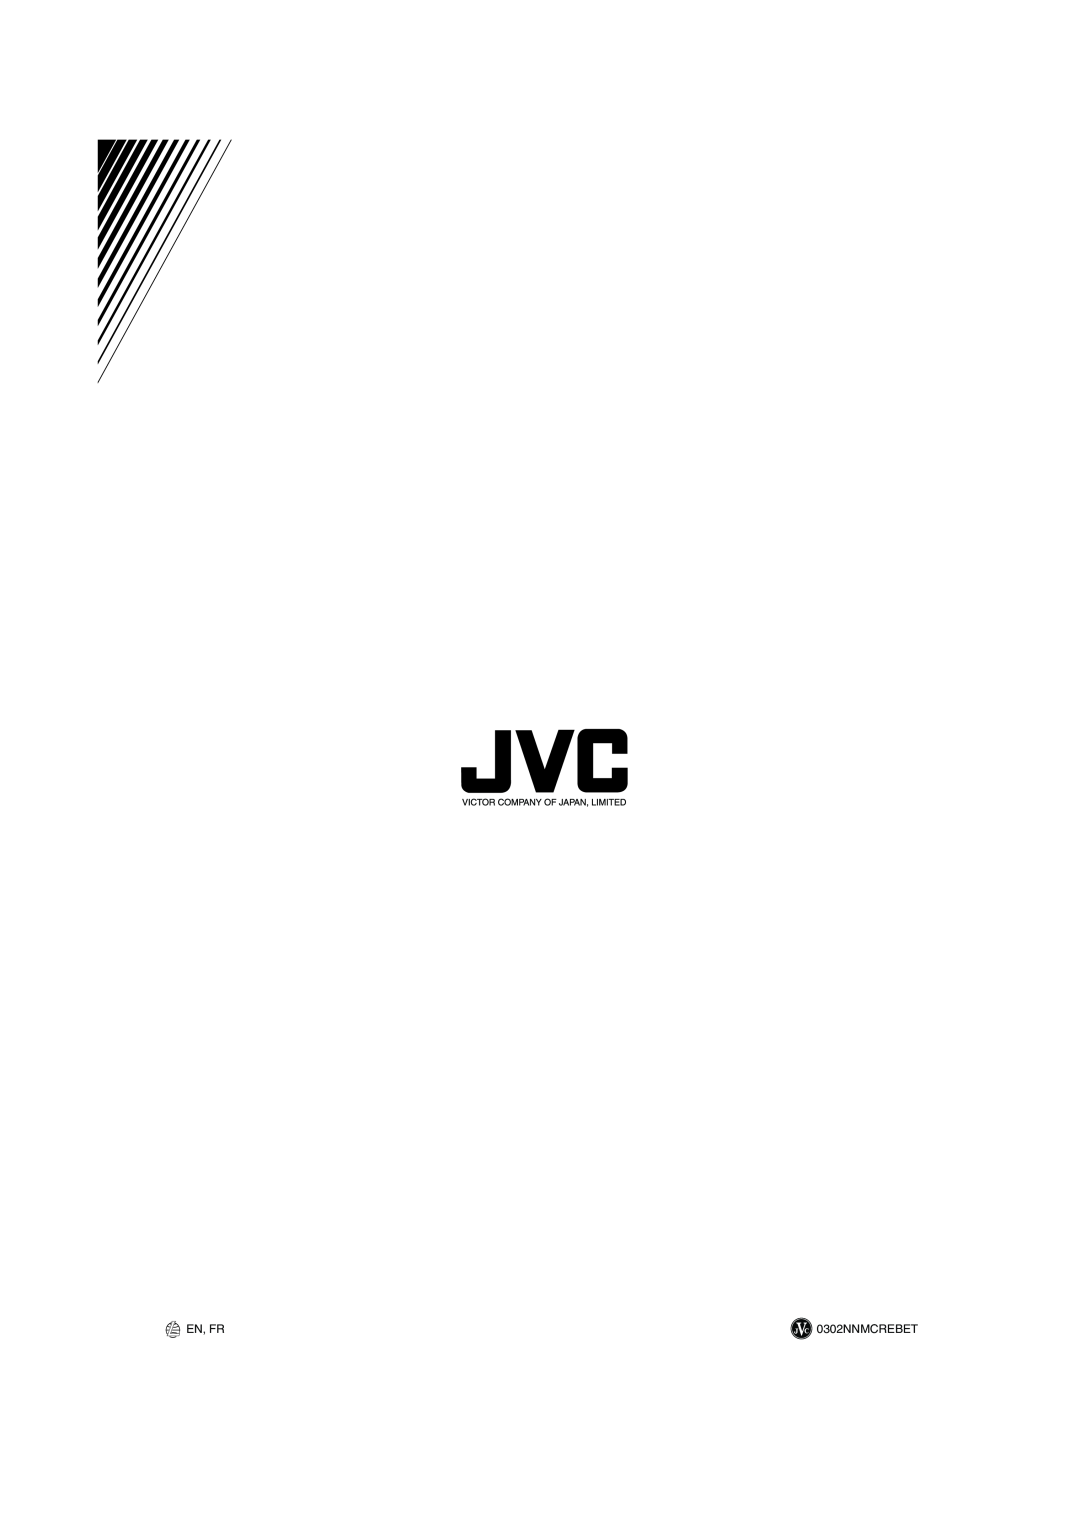 JVC MX-K30 manual En, Fr, 0302NNMCREBET 